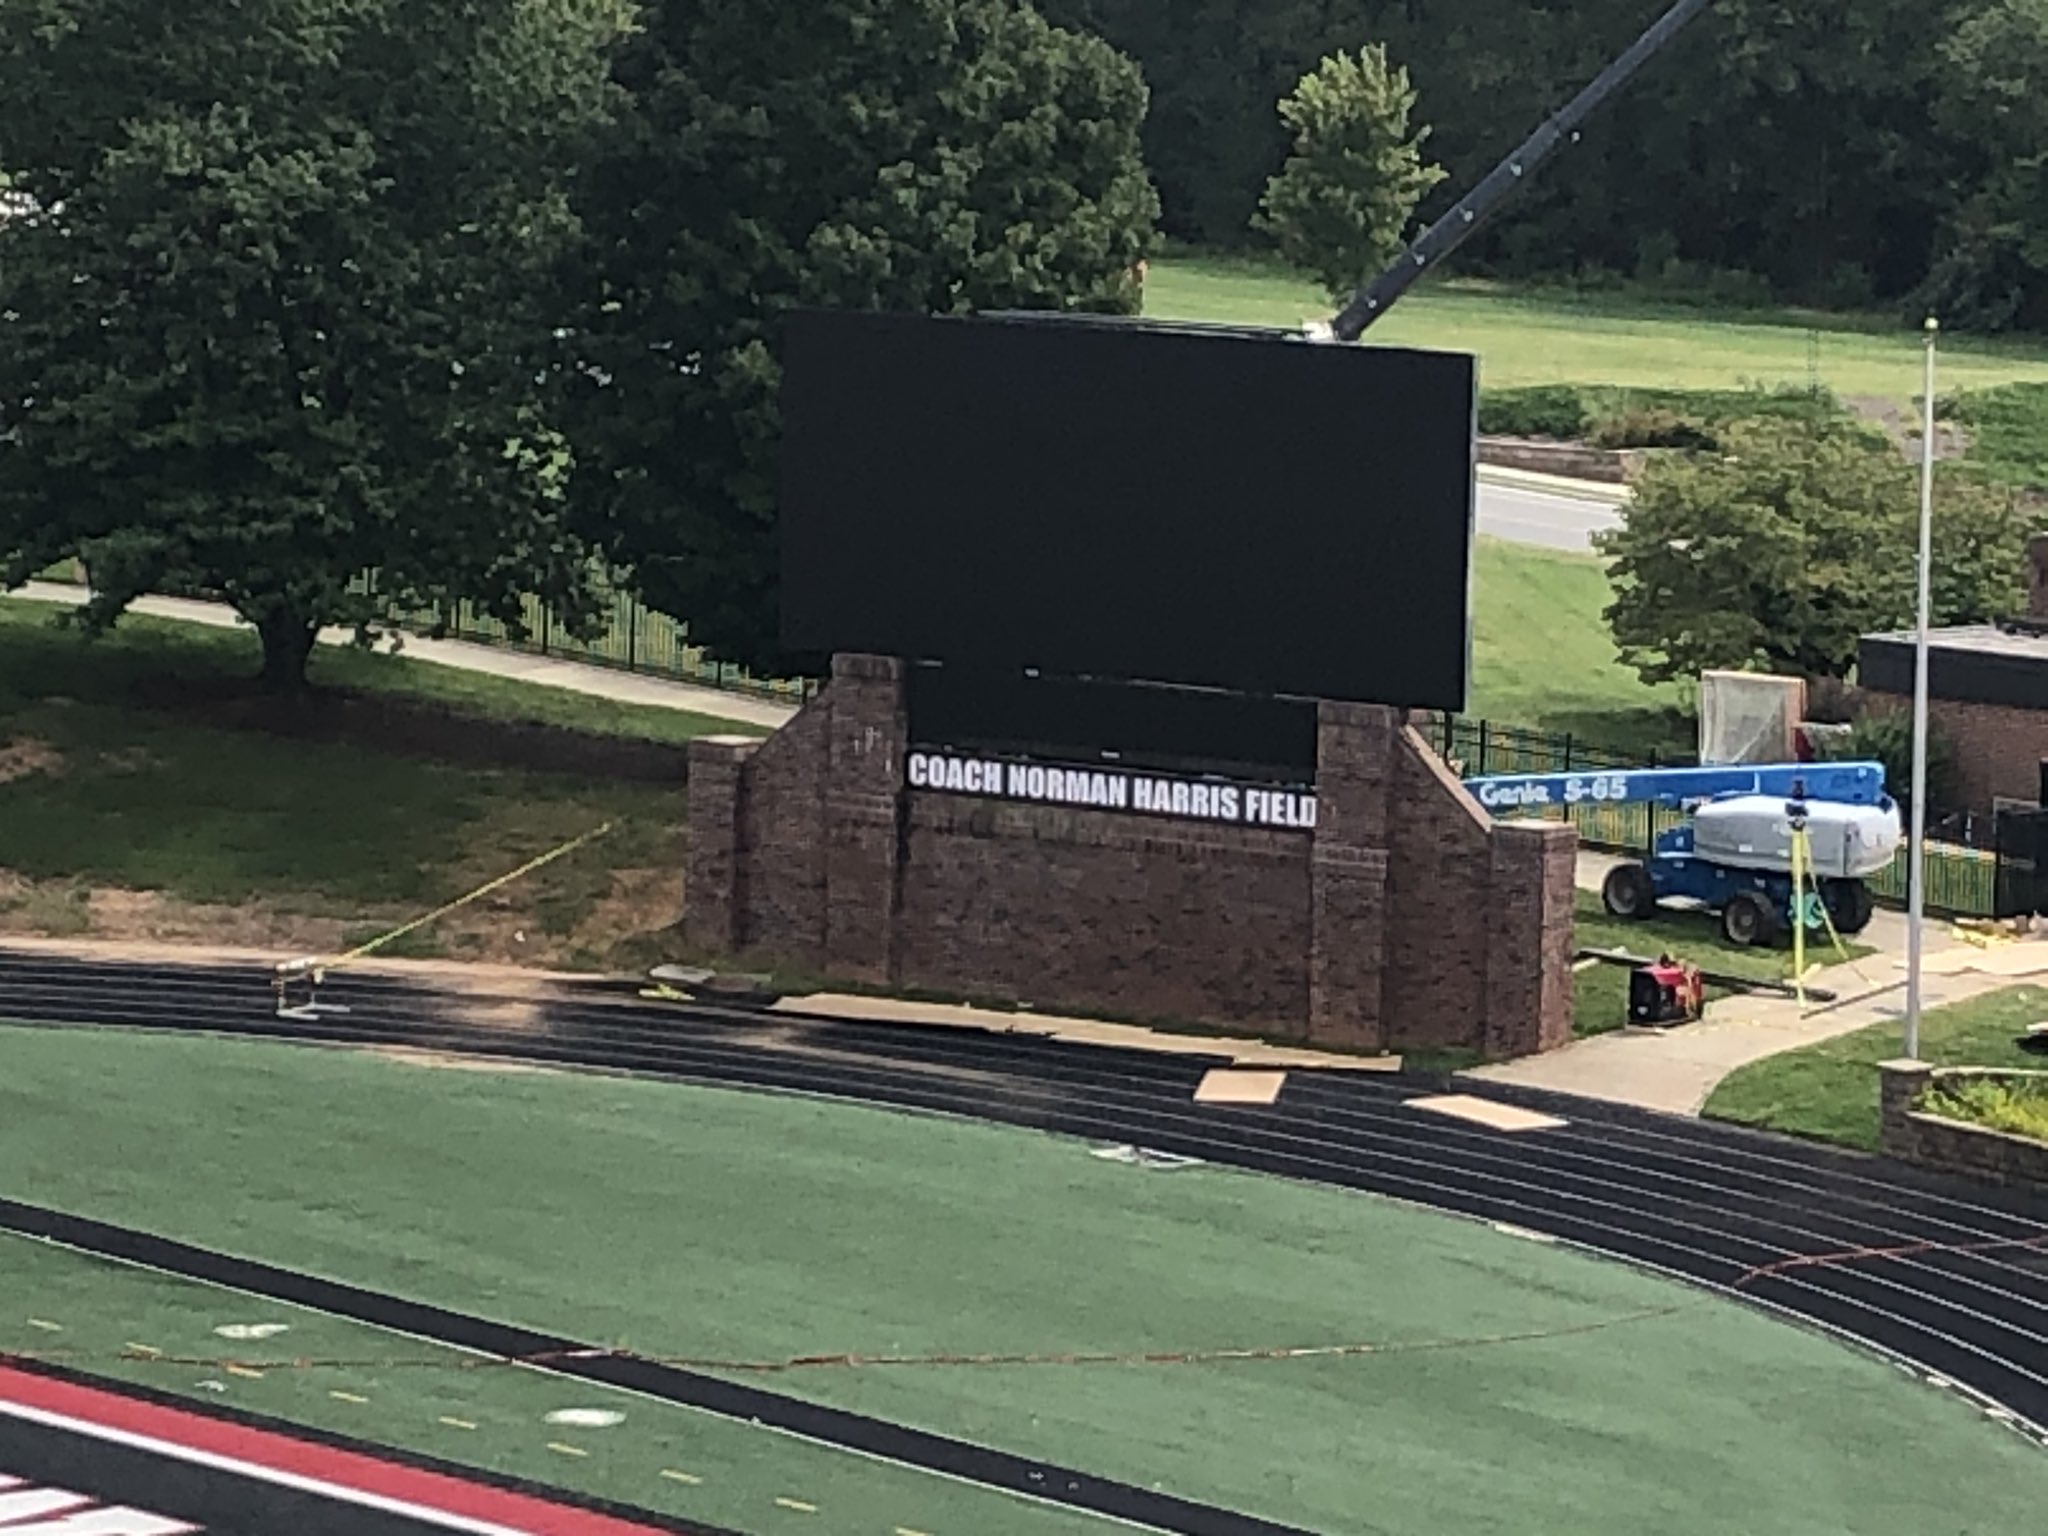 the new scoreboard is installed